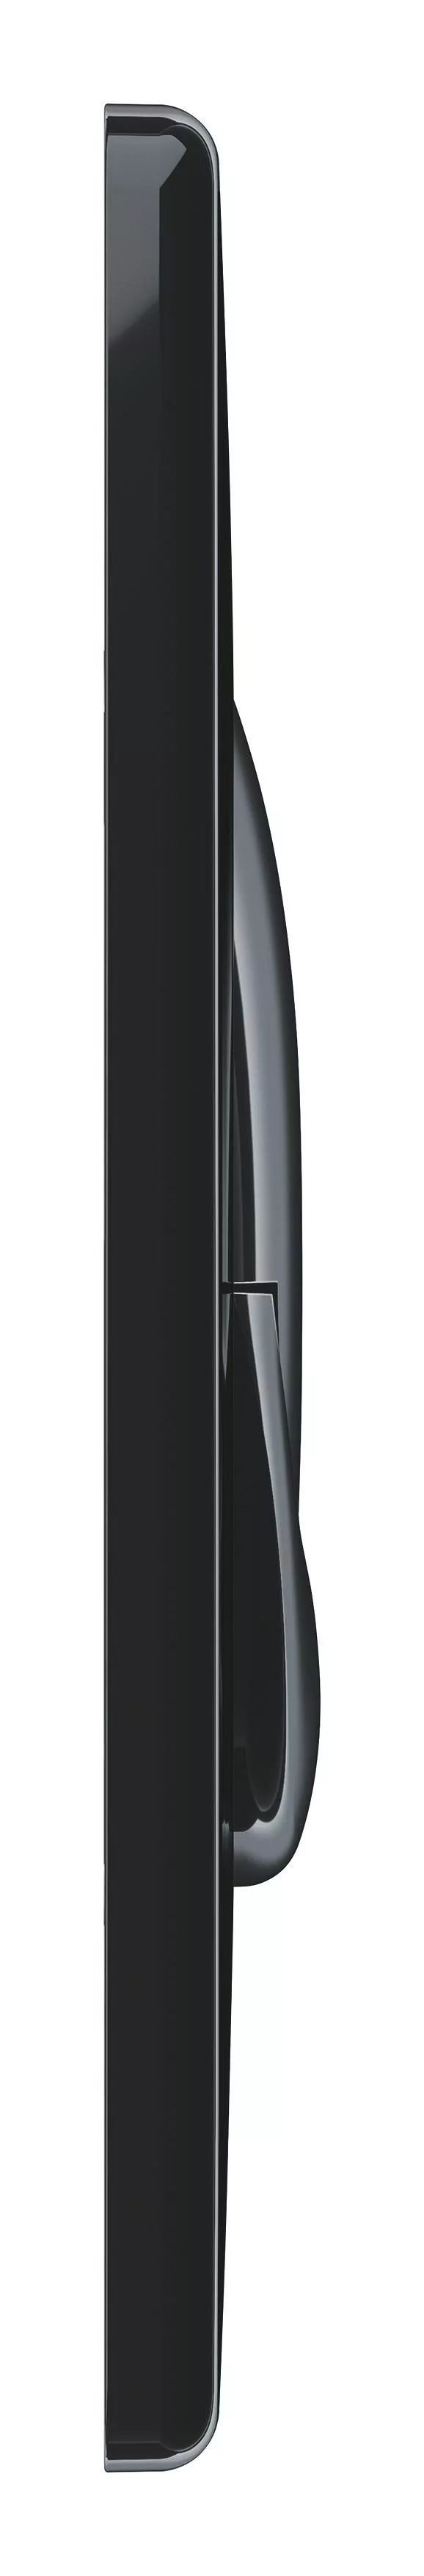 Clapeta actionare WC Grohe Start 38964KV0, dubla, verticala, 156 x 197 mm, ABS, lucios, negru